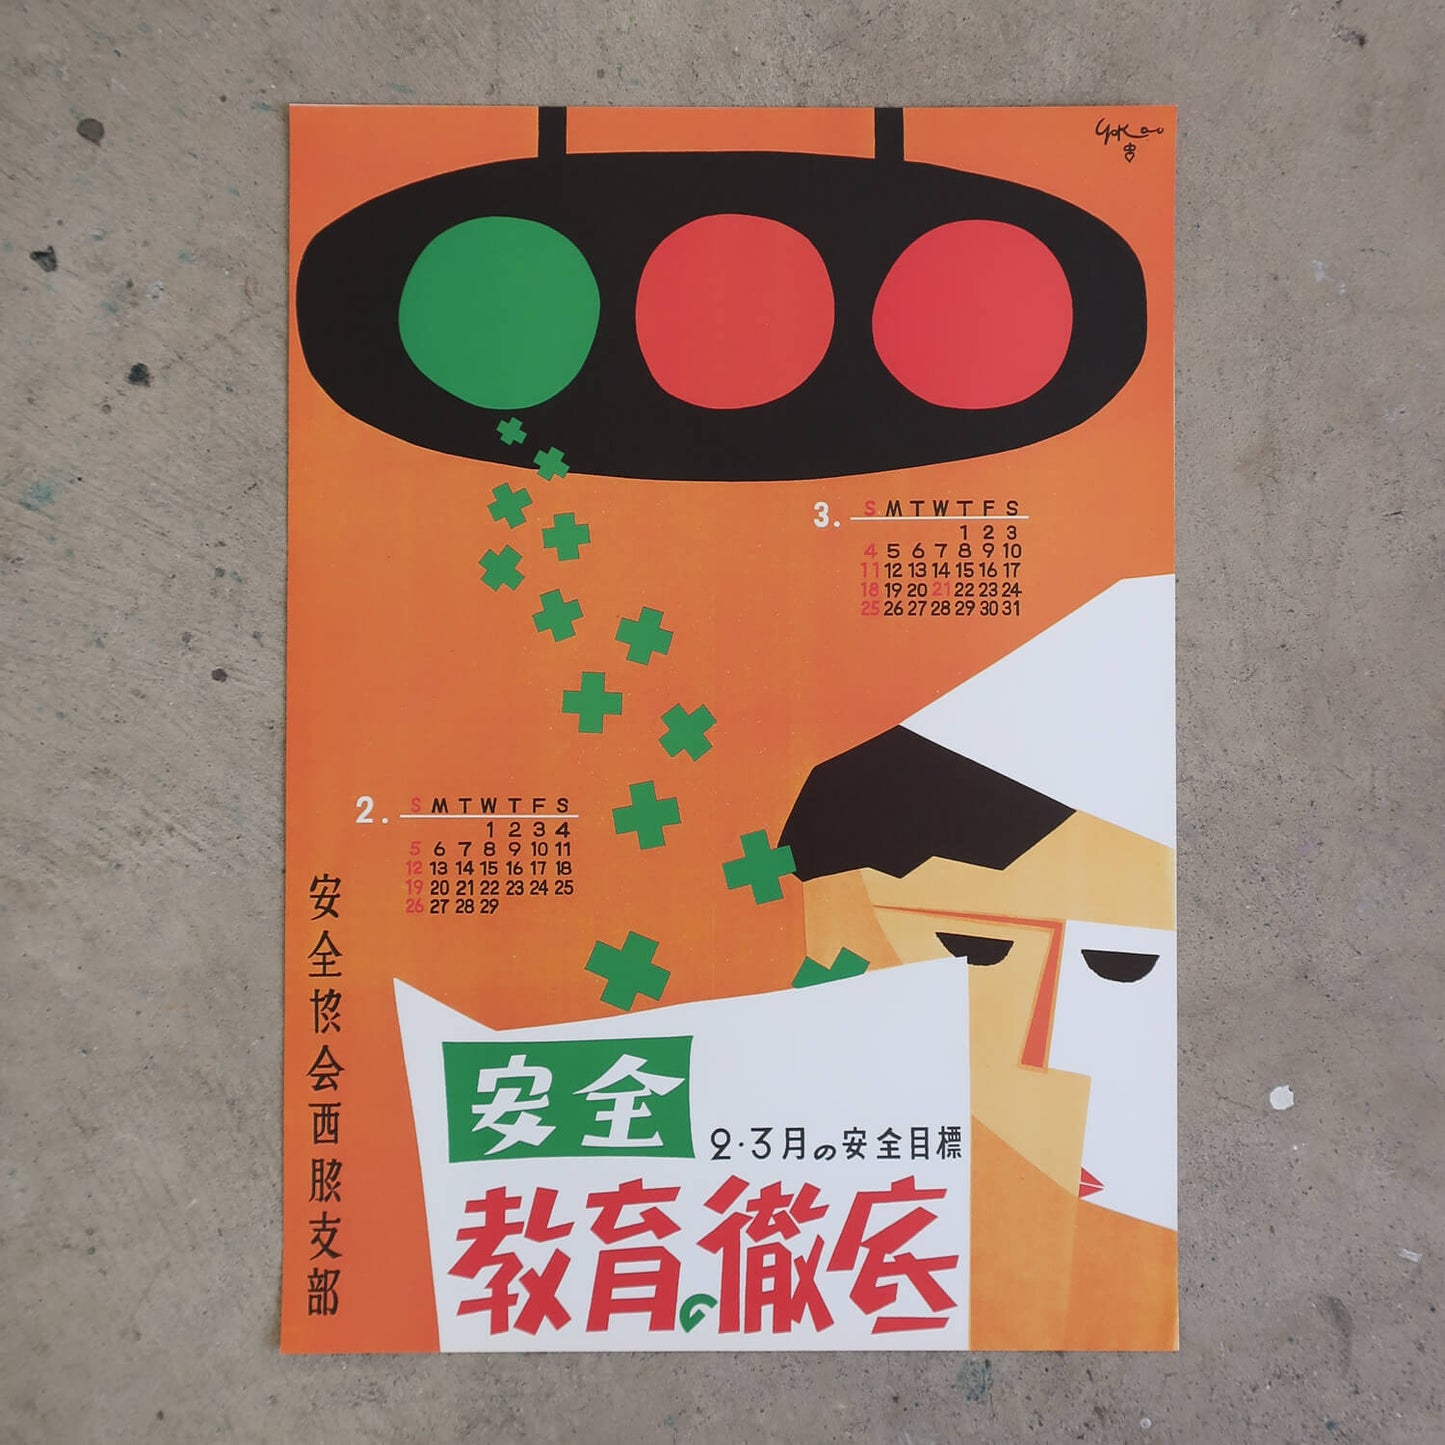 Nishiwaki Safety Association 1955 Poster (Reprint) by Tadanori Yokoo